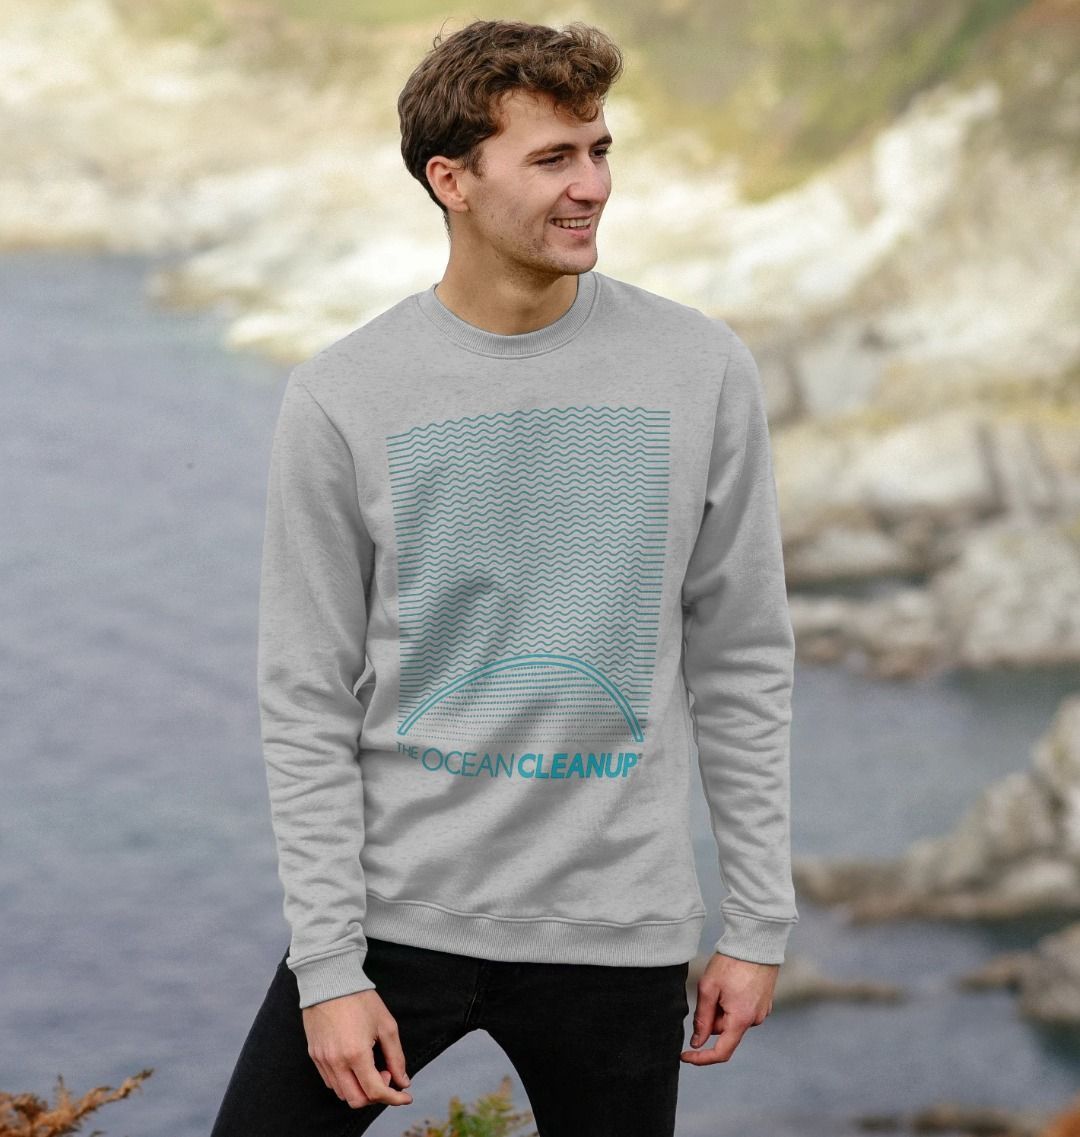 The Ocean Cleanup Recycled Sweatshirt